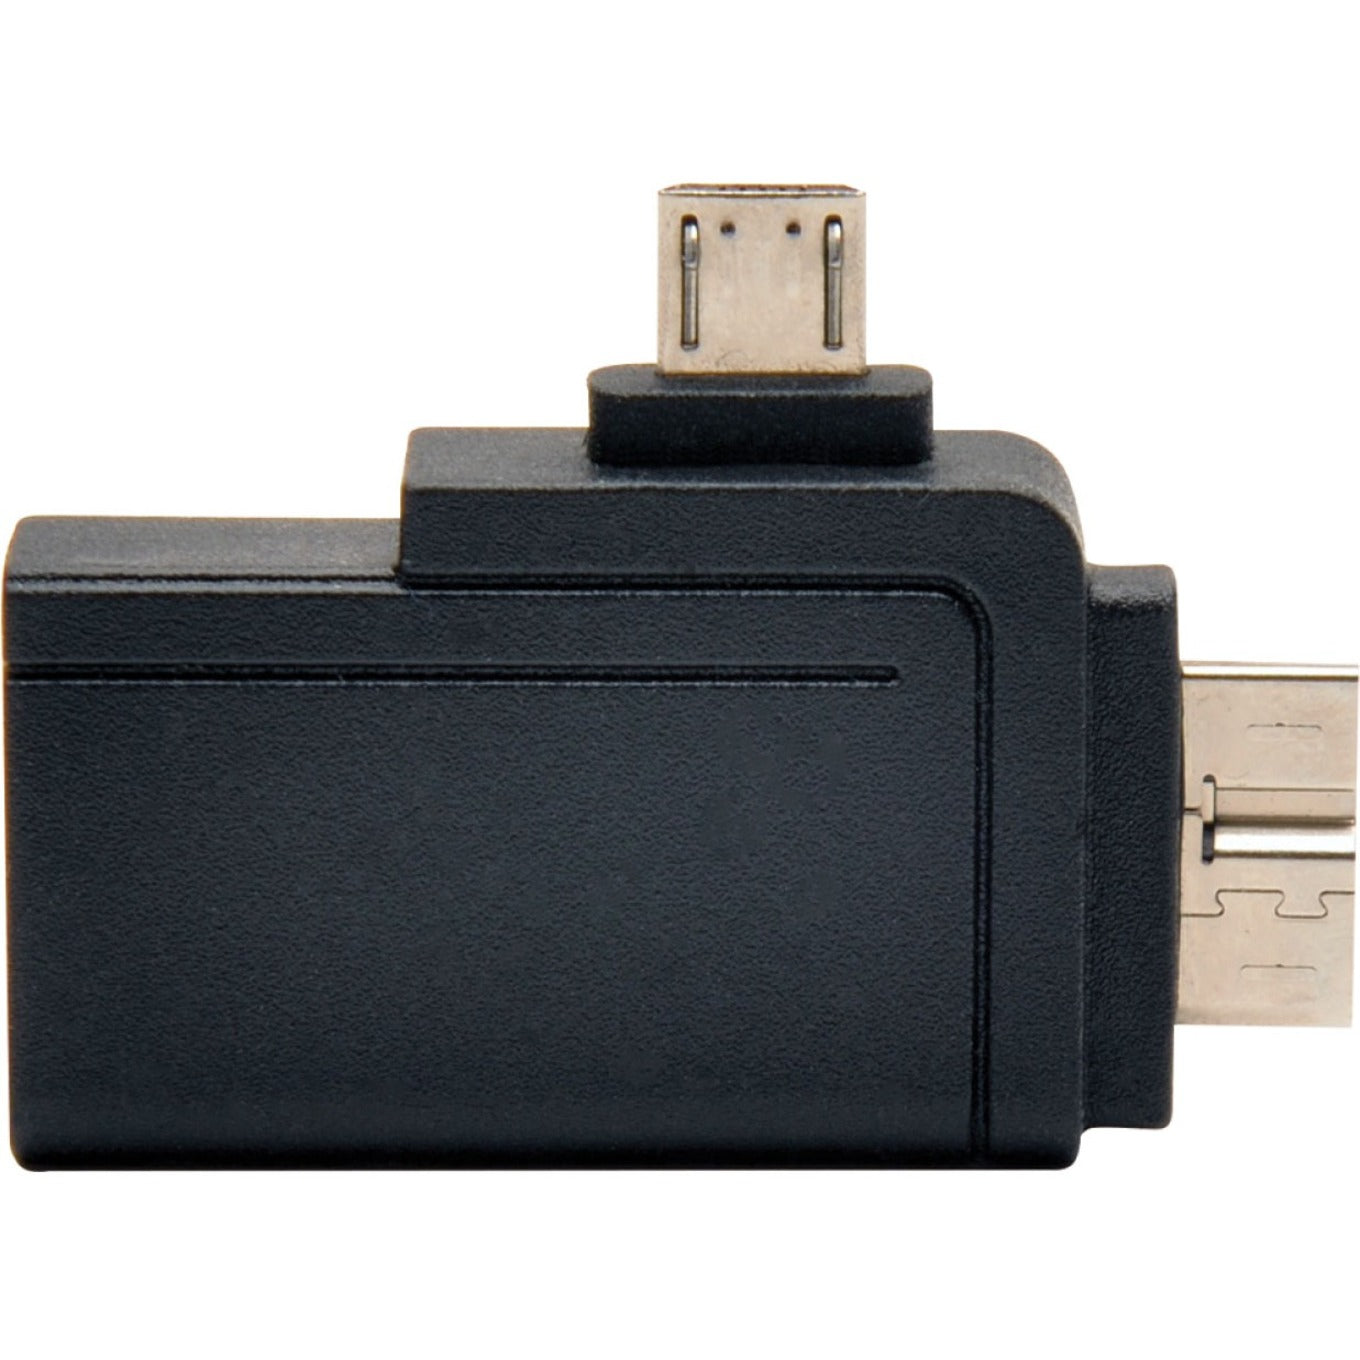 Tripp Lite U053-000-OTG 2-en-1 Adaptador OTG USB 3.0 + 2.0 Adaptador de Transferencia de Datos